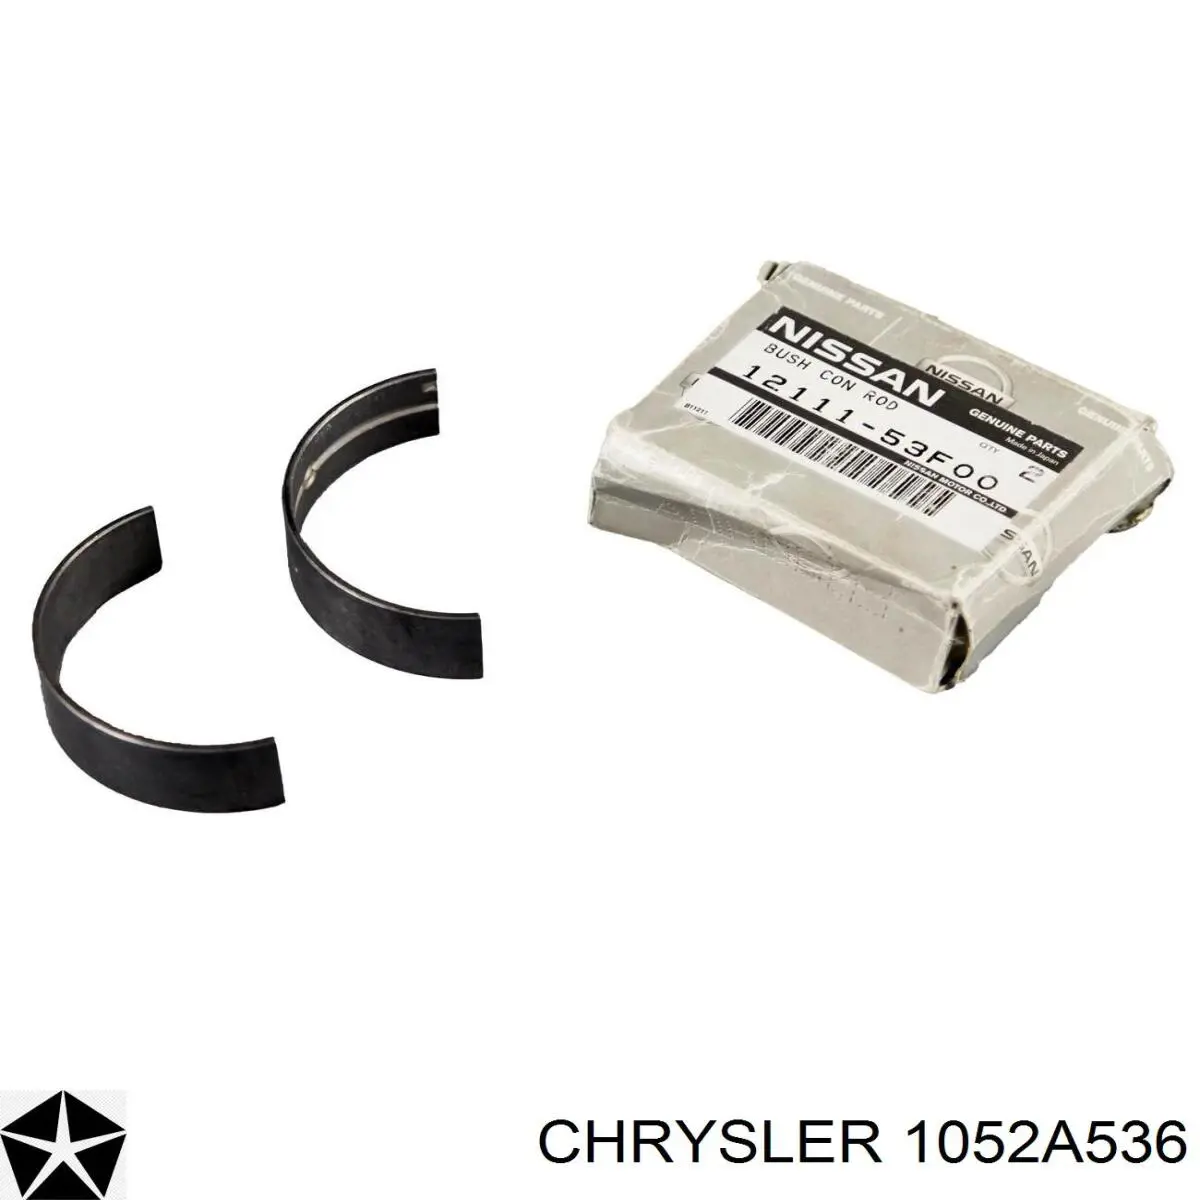 4884811AC Chrysler вкладыши коленвала коренные, комплект, стандарт (std)